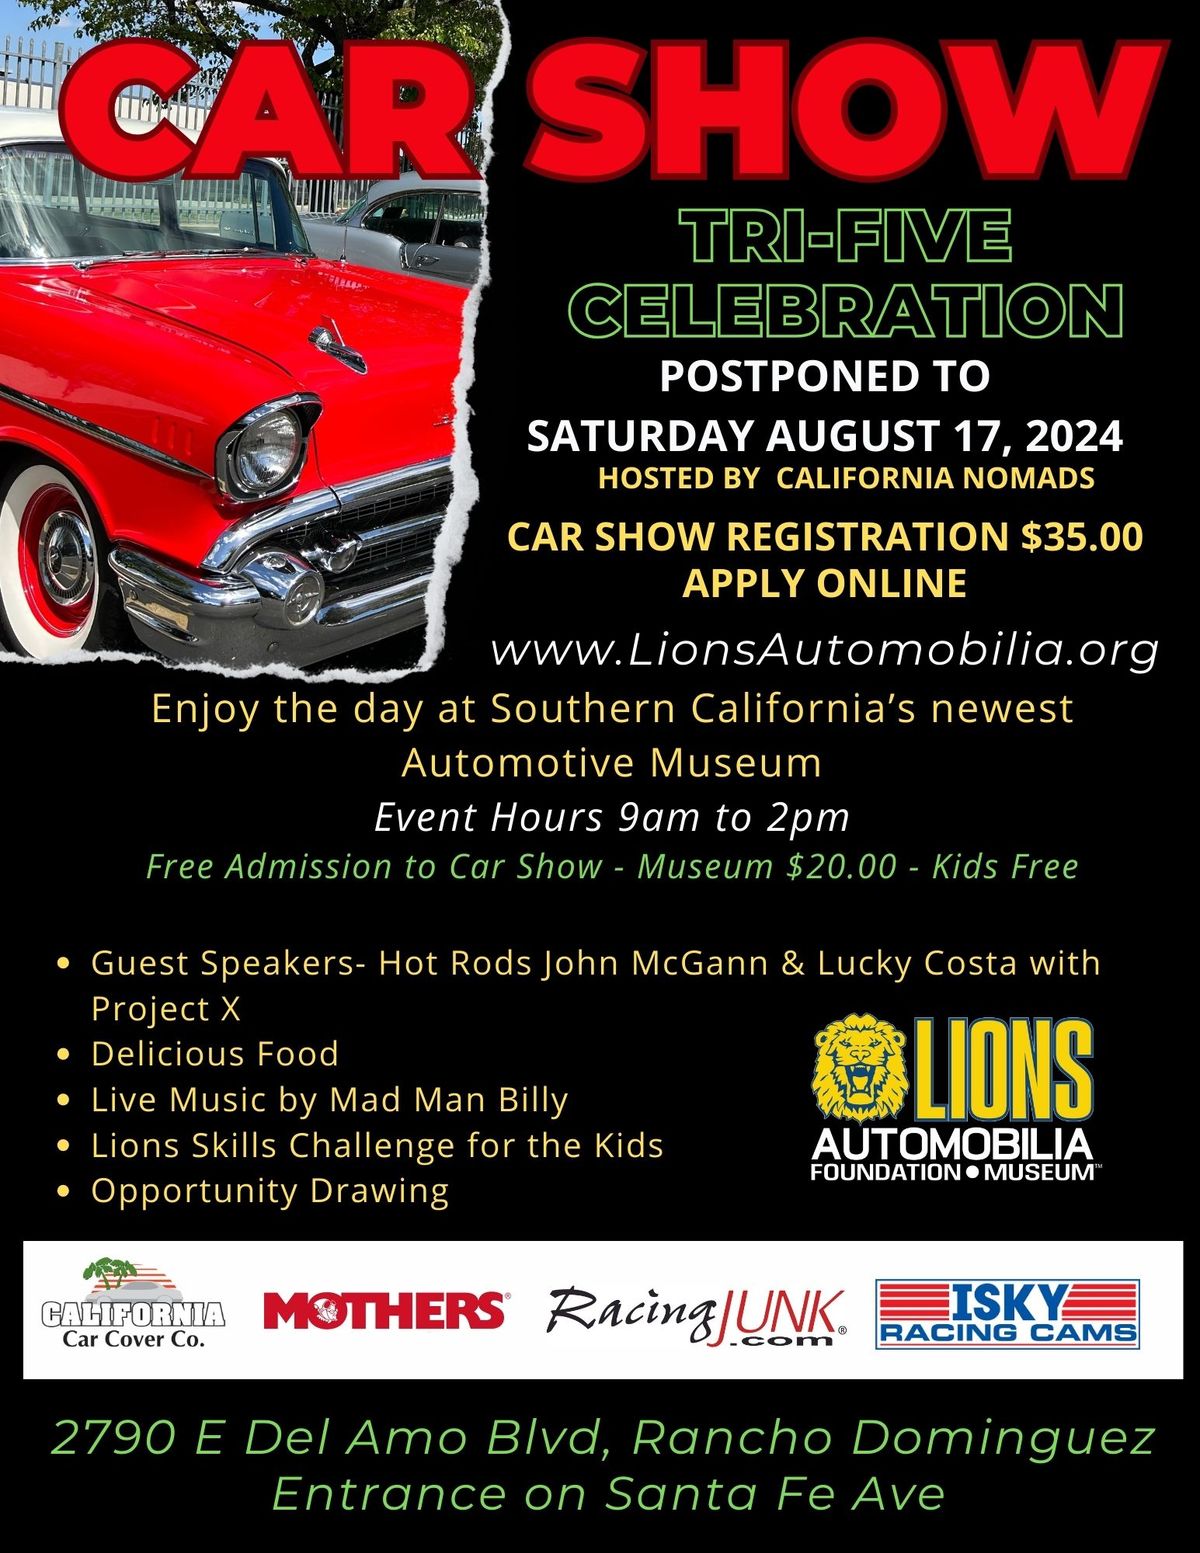 Lions Automobilia Foundation - Tri Five Celebration Car Show